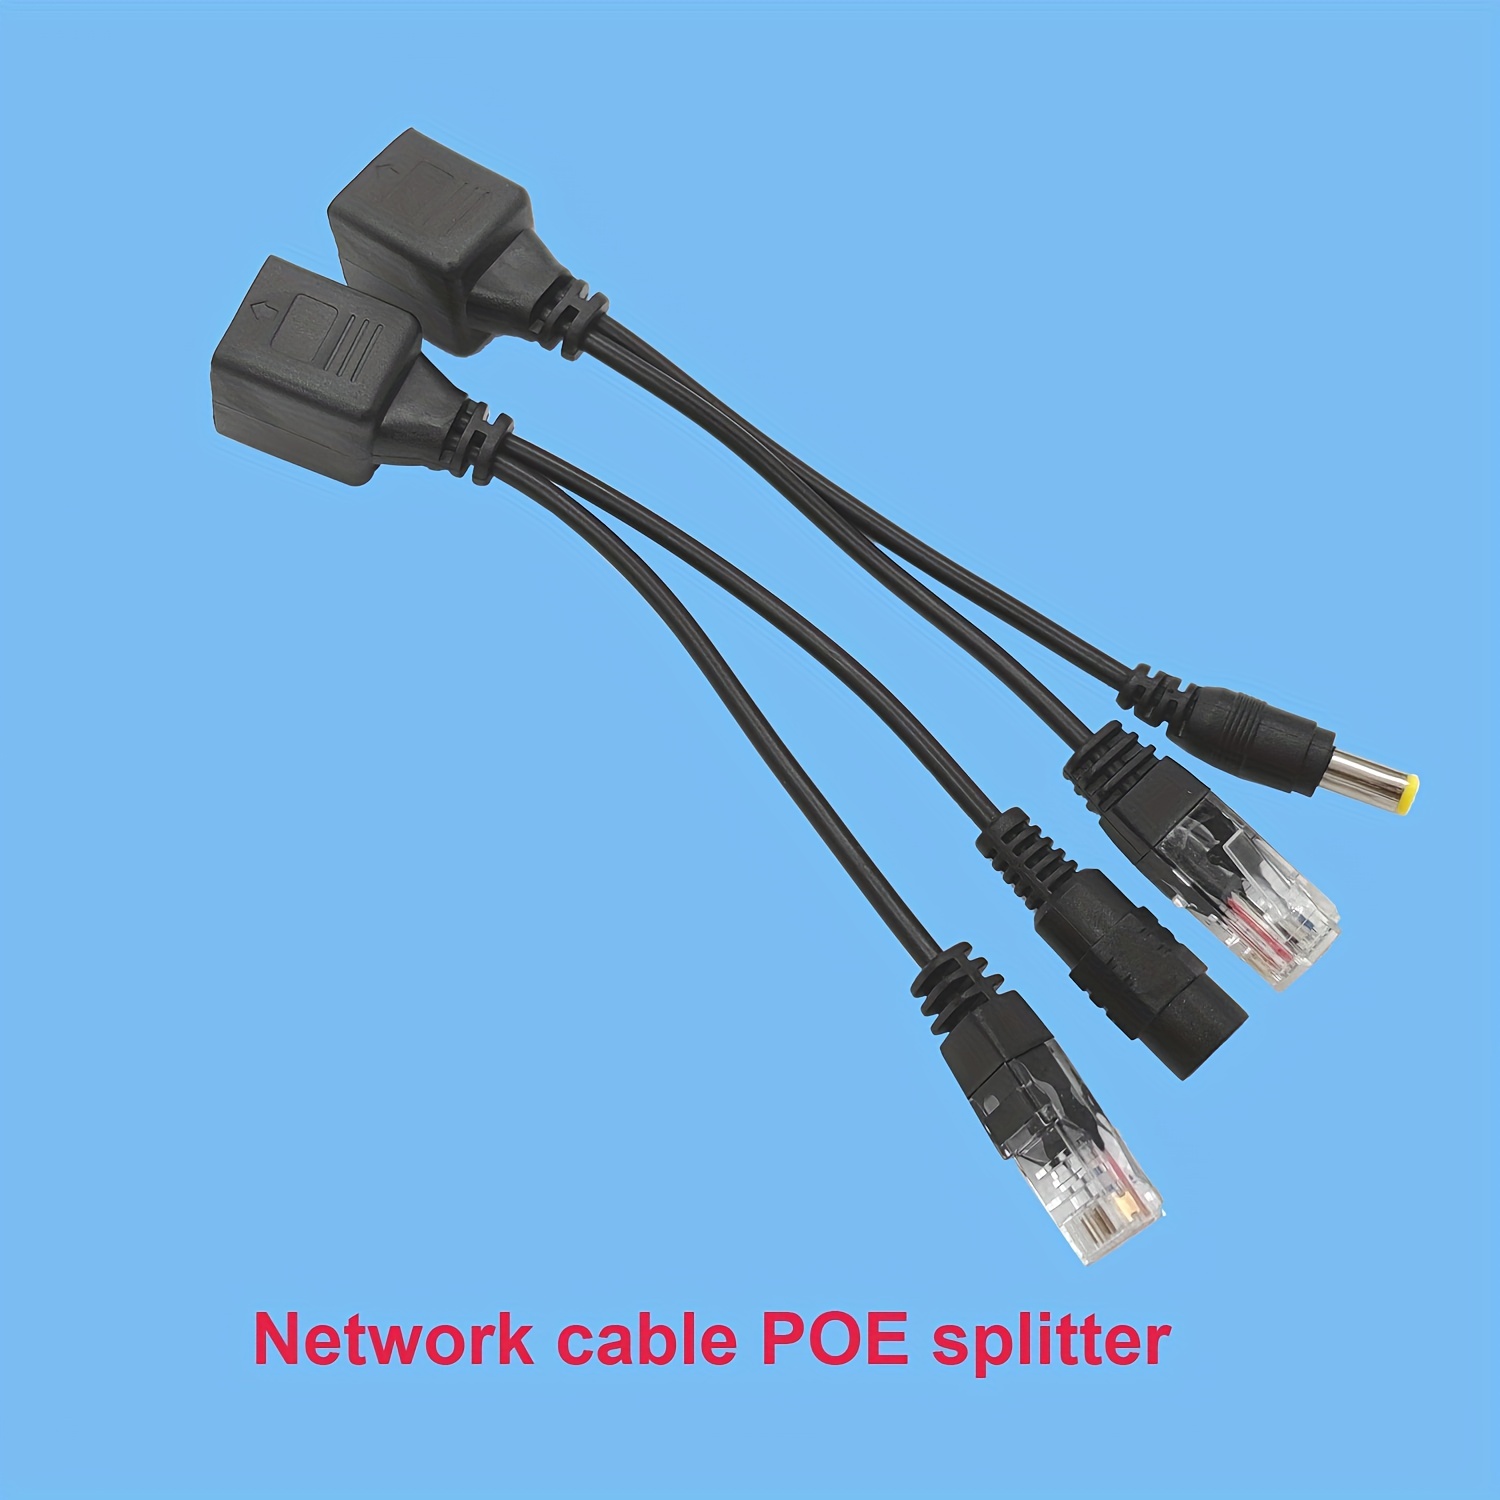 Adaptateur WiFi vers Ethernet sans fil 5G/2,4 GHz 1200 Mbps WiFi vers  Ethernet convertit universel RJ45 filaire Ethernet vers WiFi adaptateur  Ethernet